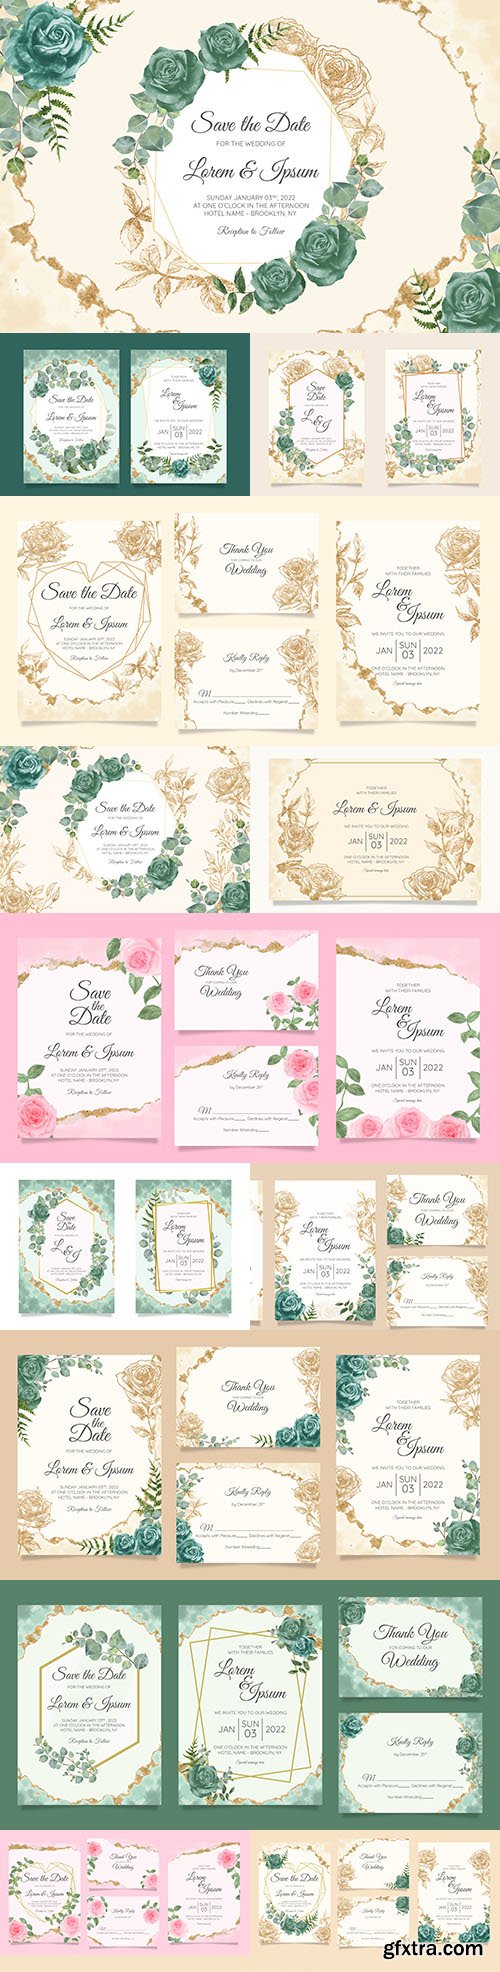 Wedding floral watercolor decorative invitations 21